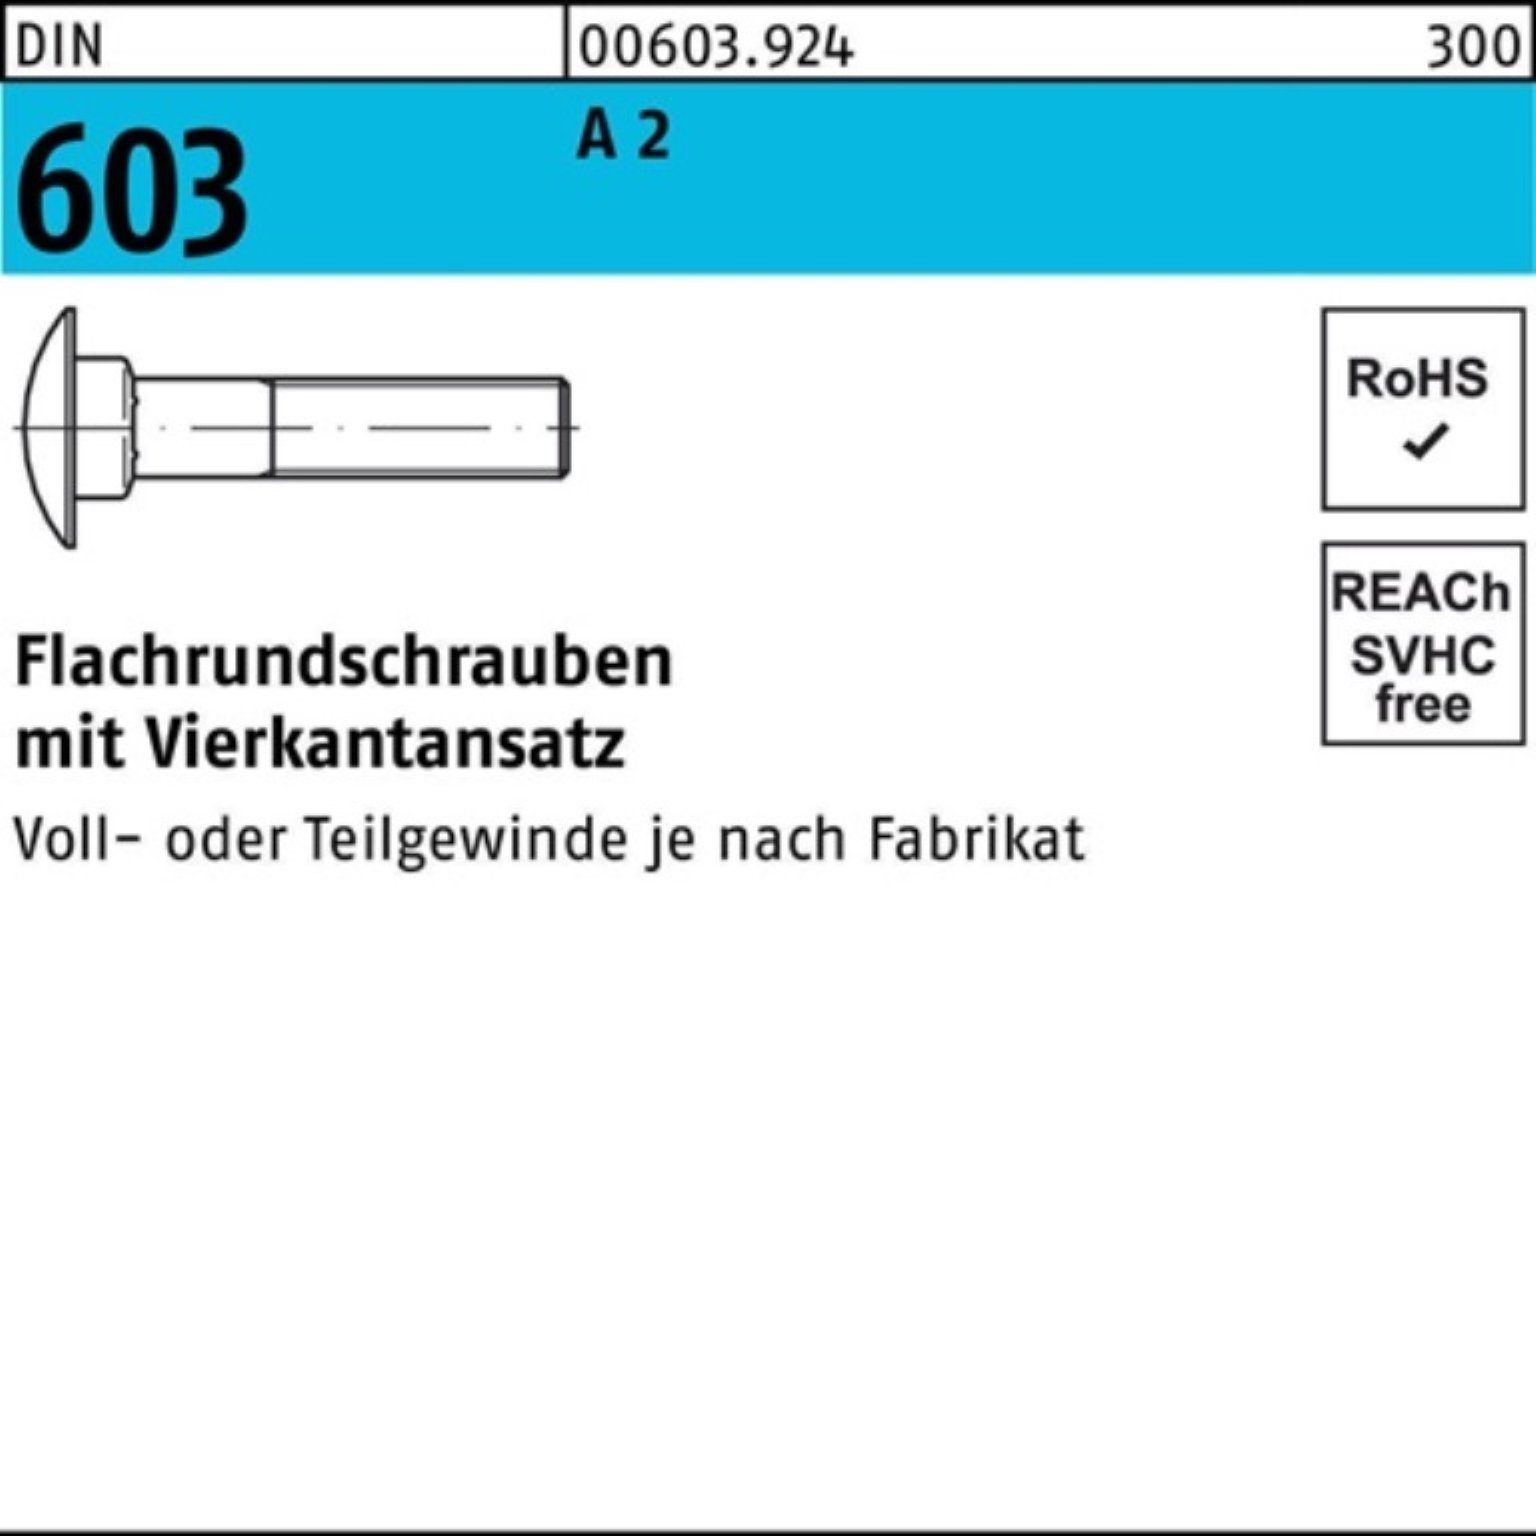 Reyher Schraube 100er Pack Flachrundschraube DIN 603 Vierkantansatz M16x 60 A 2 50 St